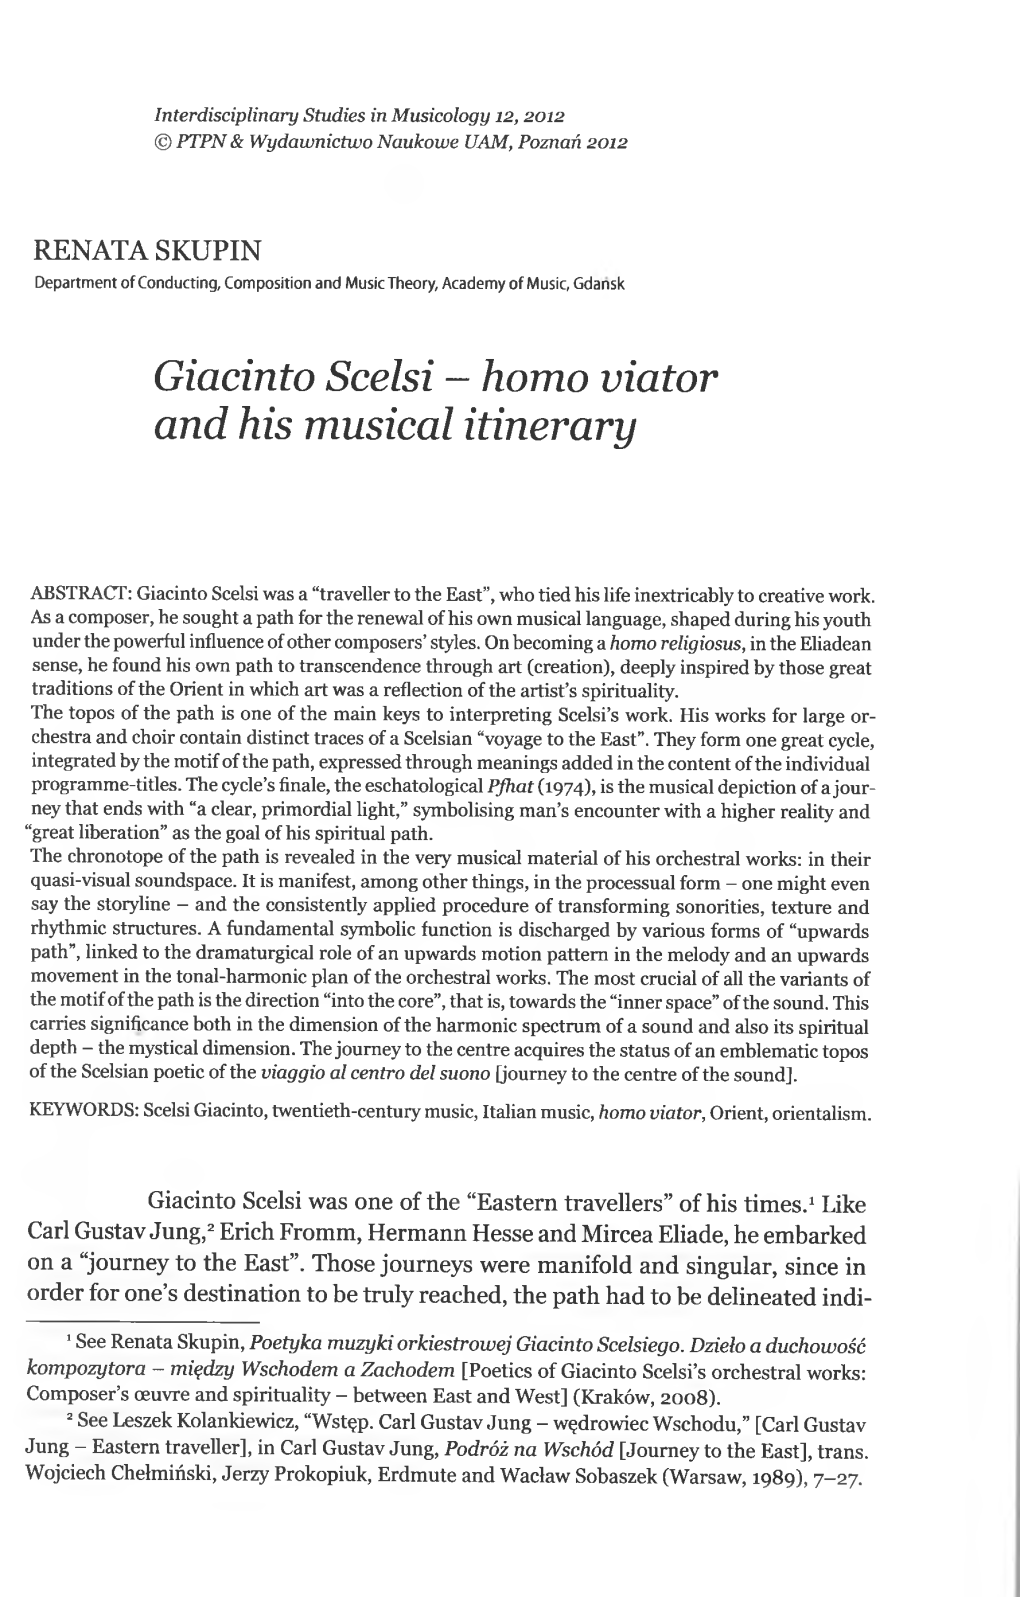 Giacinto Scelsi - Homo Viator and His Musical Itinerary